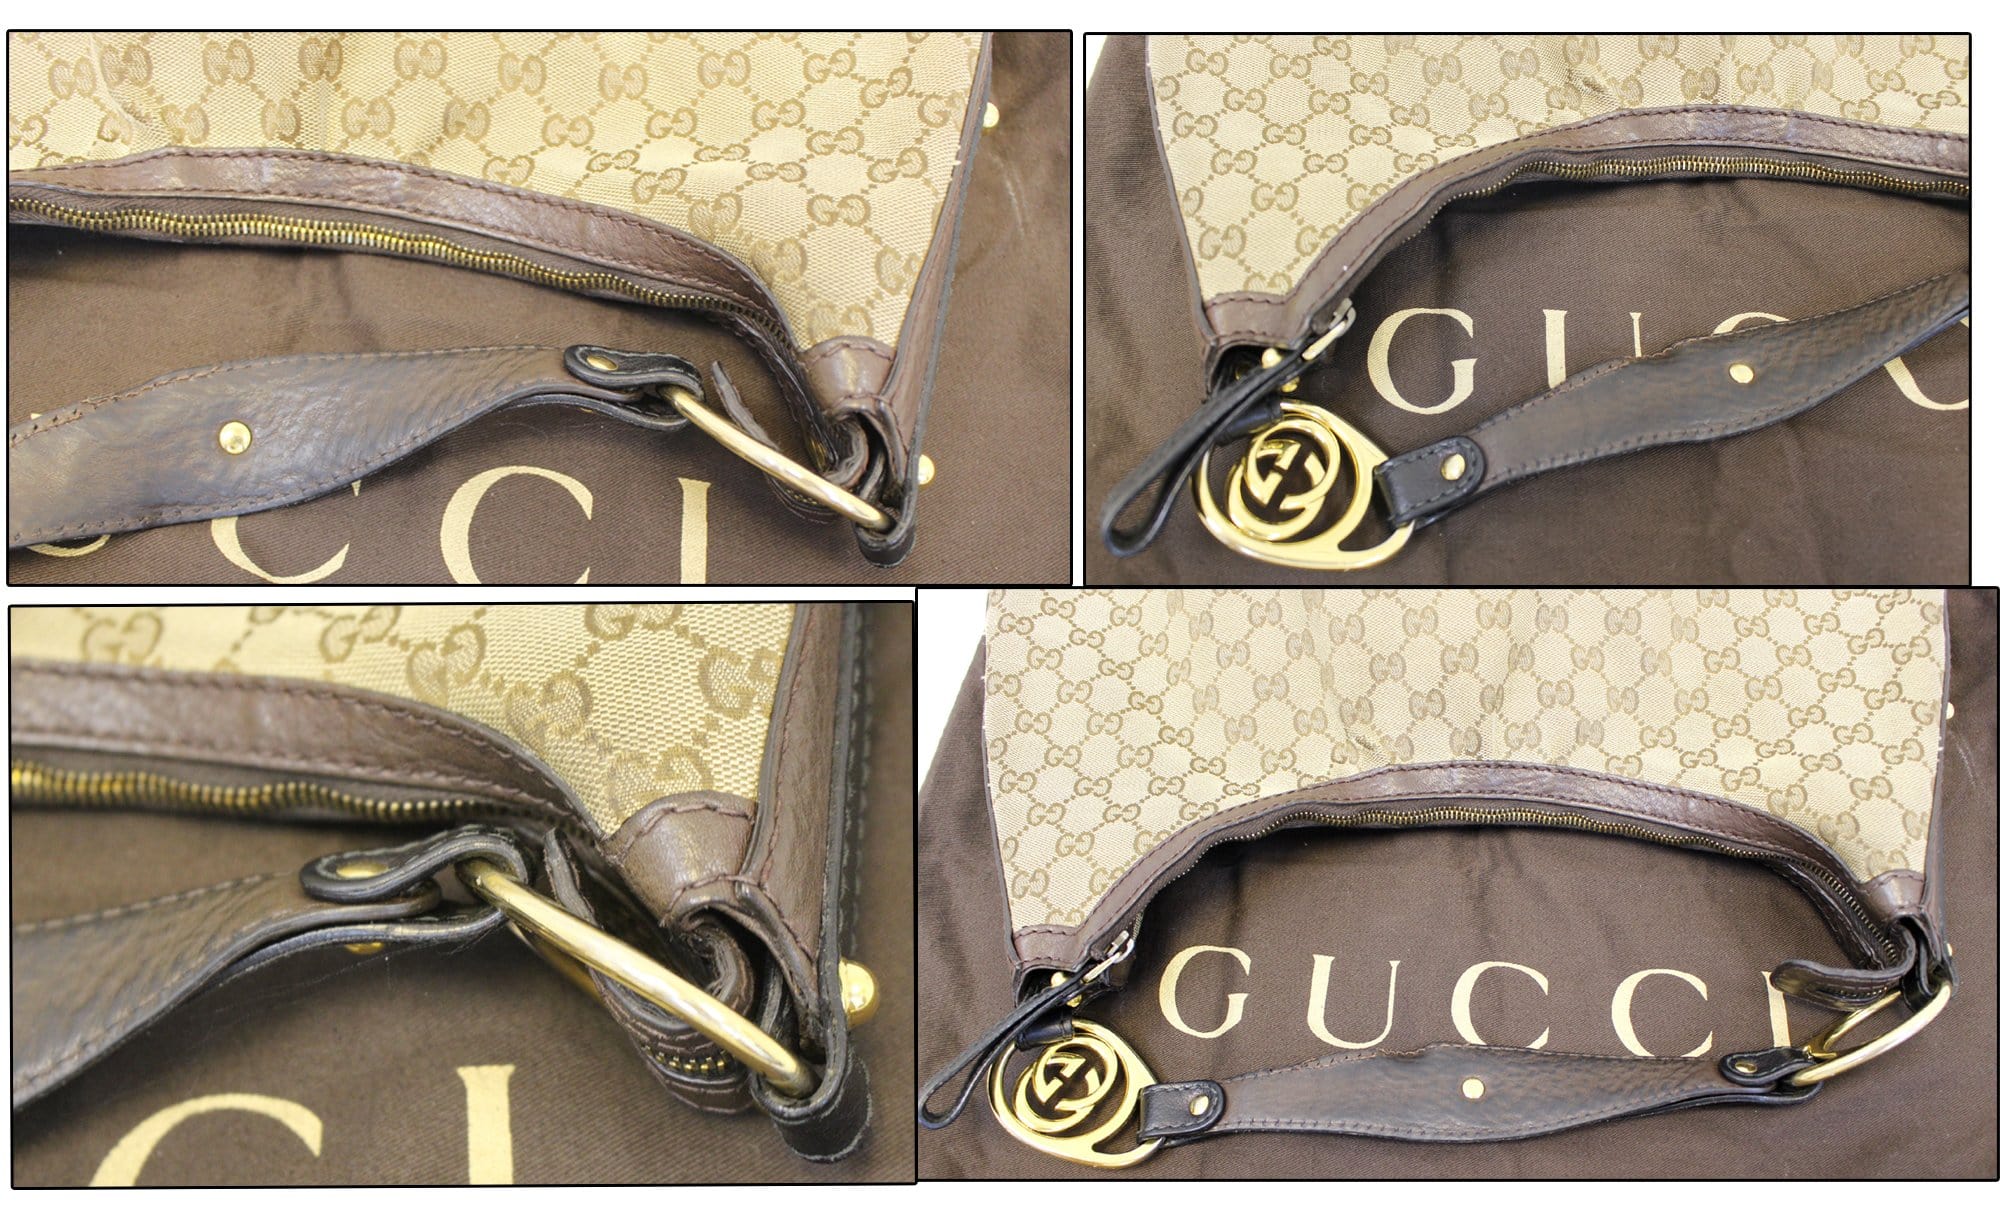 Gucci Interlocking G Messenger Bag GG Supreme Canvas Beige/Ebony